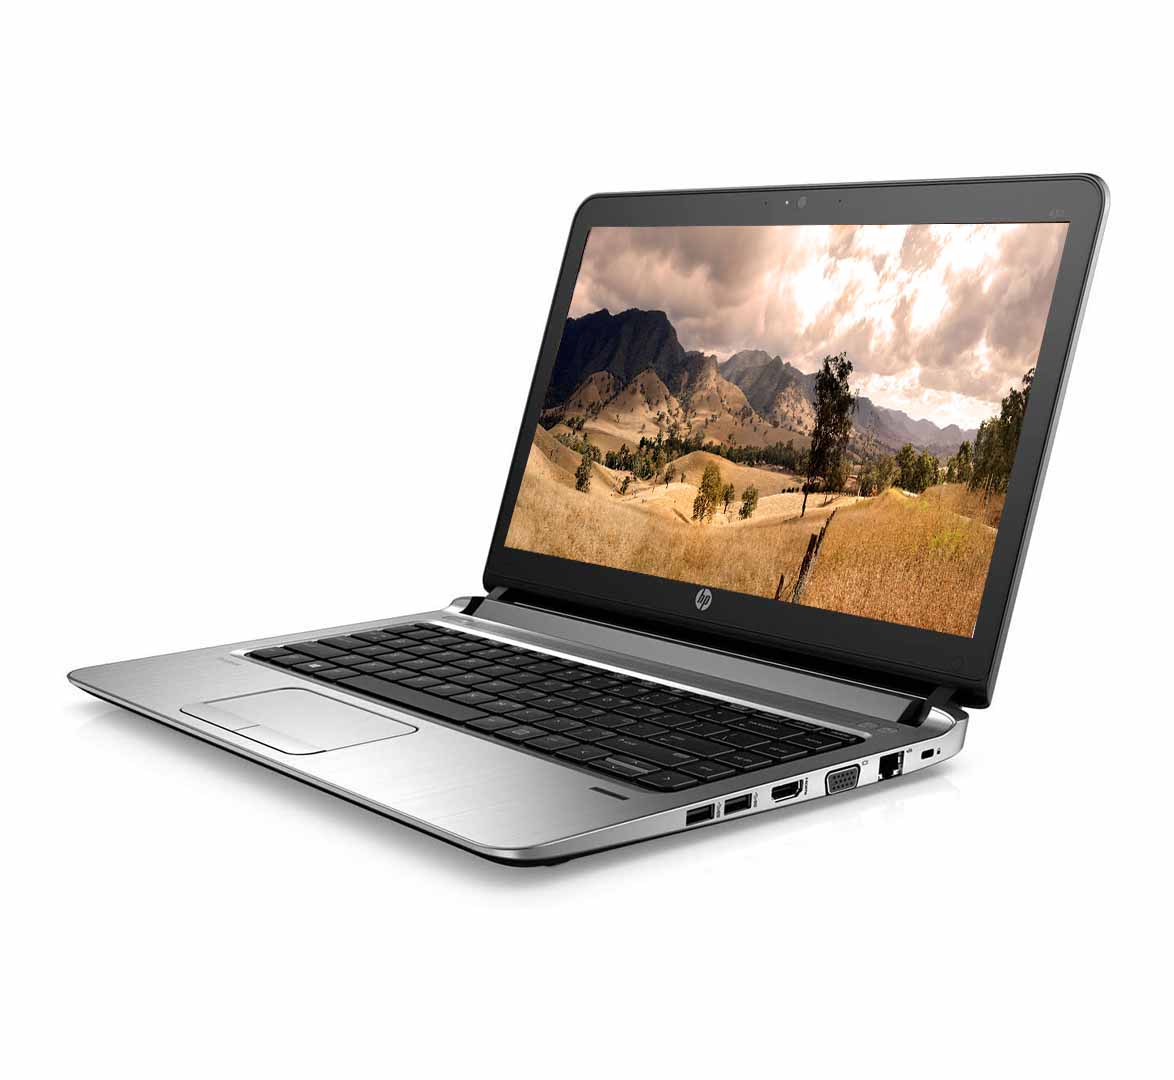 HP ProBook 430 G3 Business Laptop, Intel Core i7-6th Gen CPU, 8GB RAM, 256GB SSD, 13 inch Display, Windows 10 Pro, Refurbished Laptop